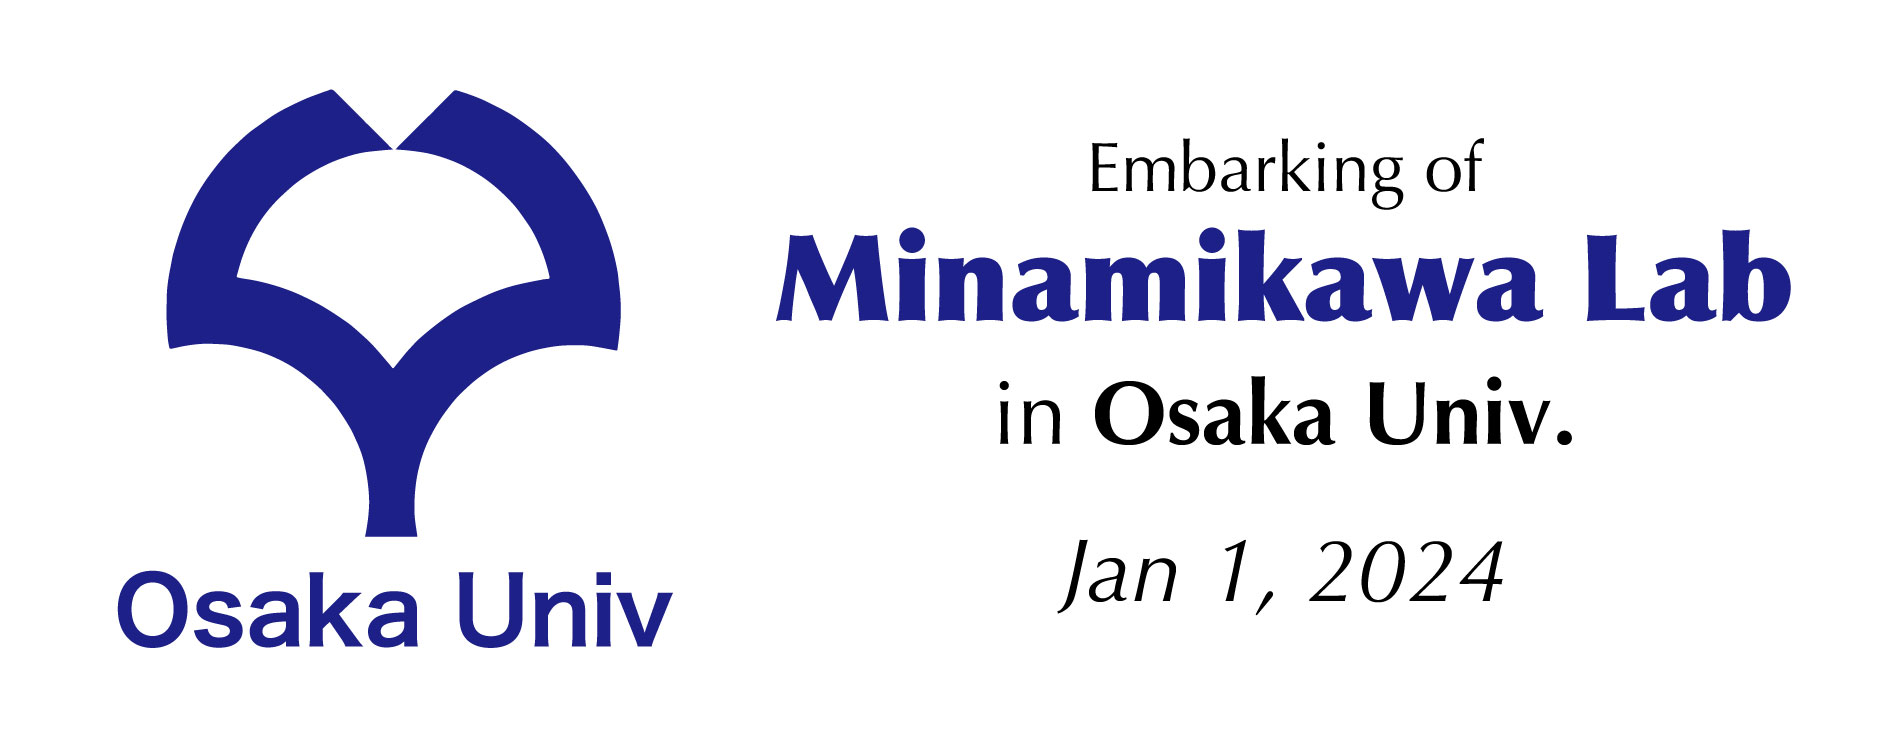 Takeo Minamikawa's website